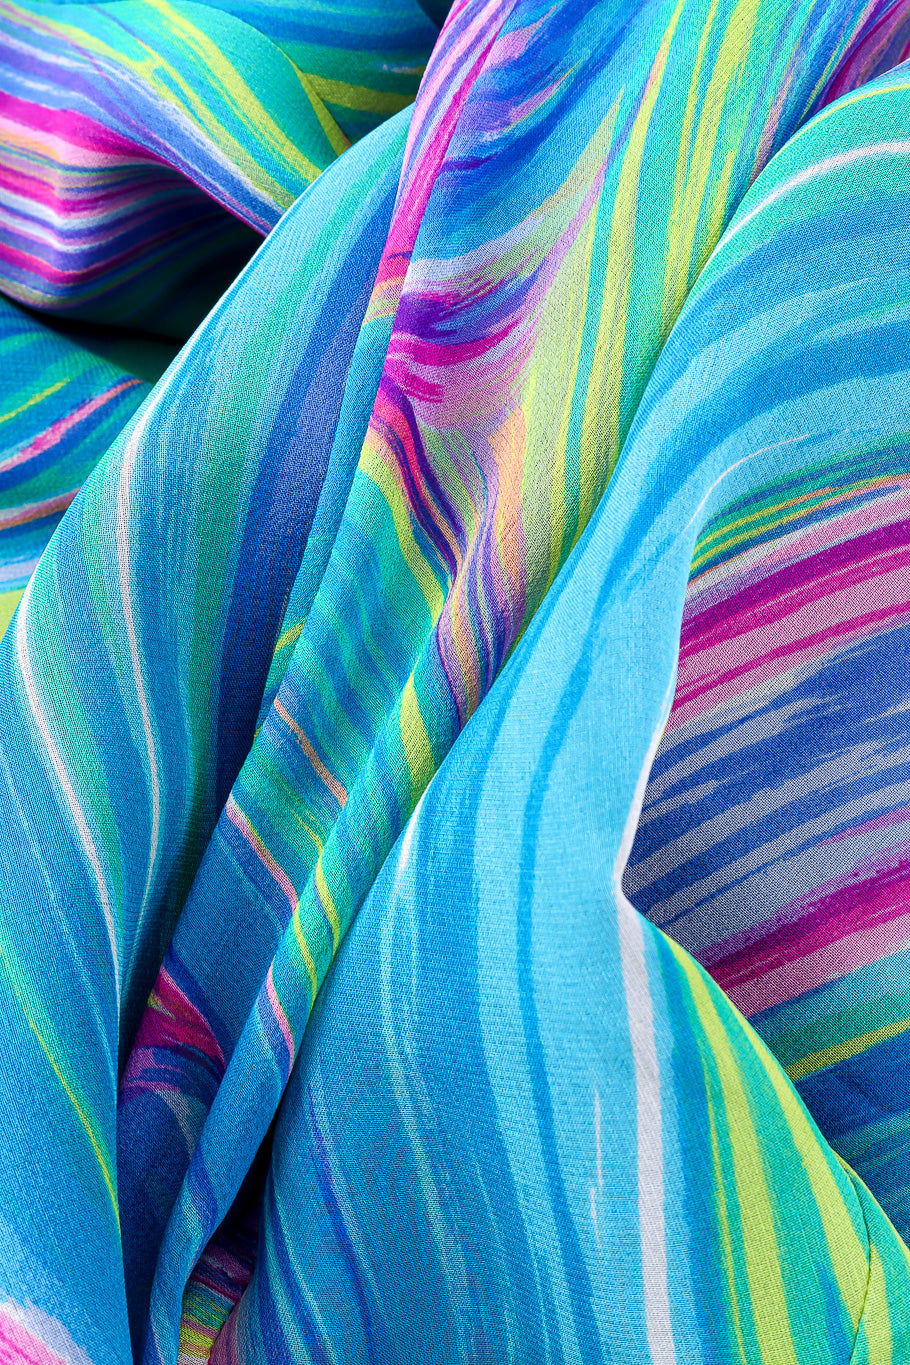 Vintage Mr. Frank Abstract Swirl Silk Dress fabric closeup @Recessla